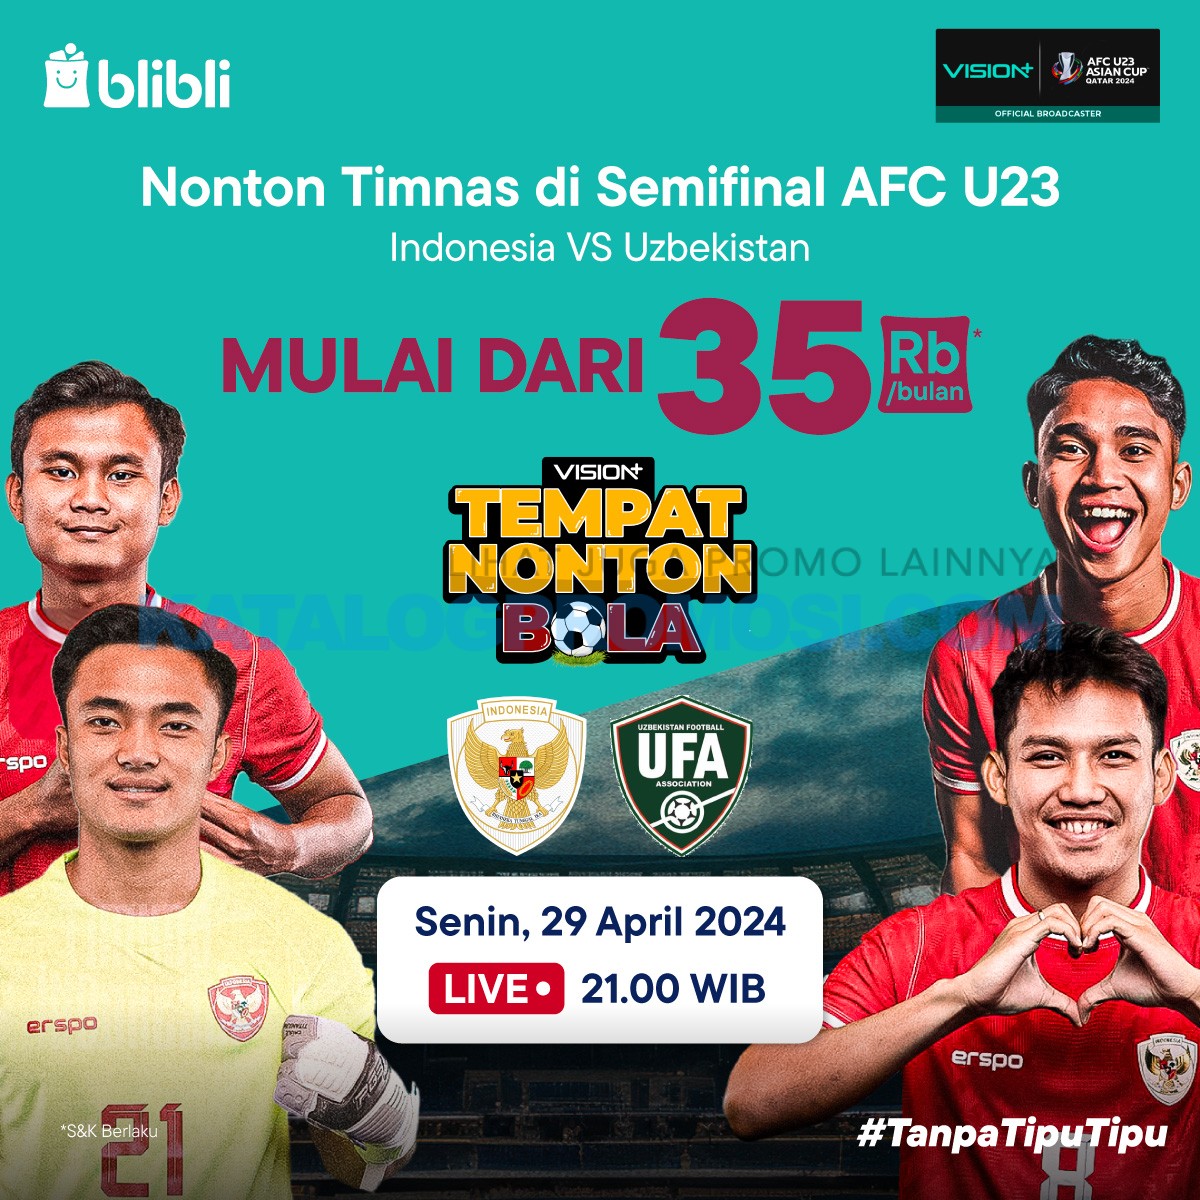 promo_nonton_timnas_semifinal_afc_u23_indonesia_uzbekistan_vision_tempat_nonton_bola_blibli.jpg